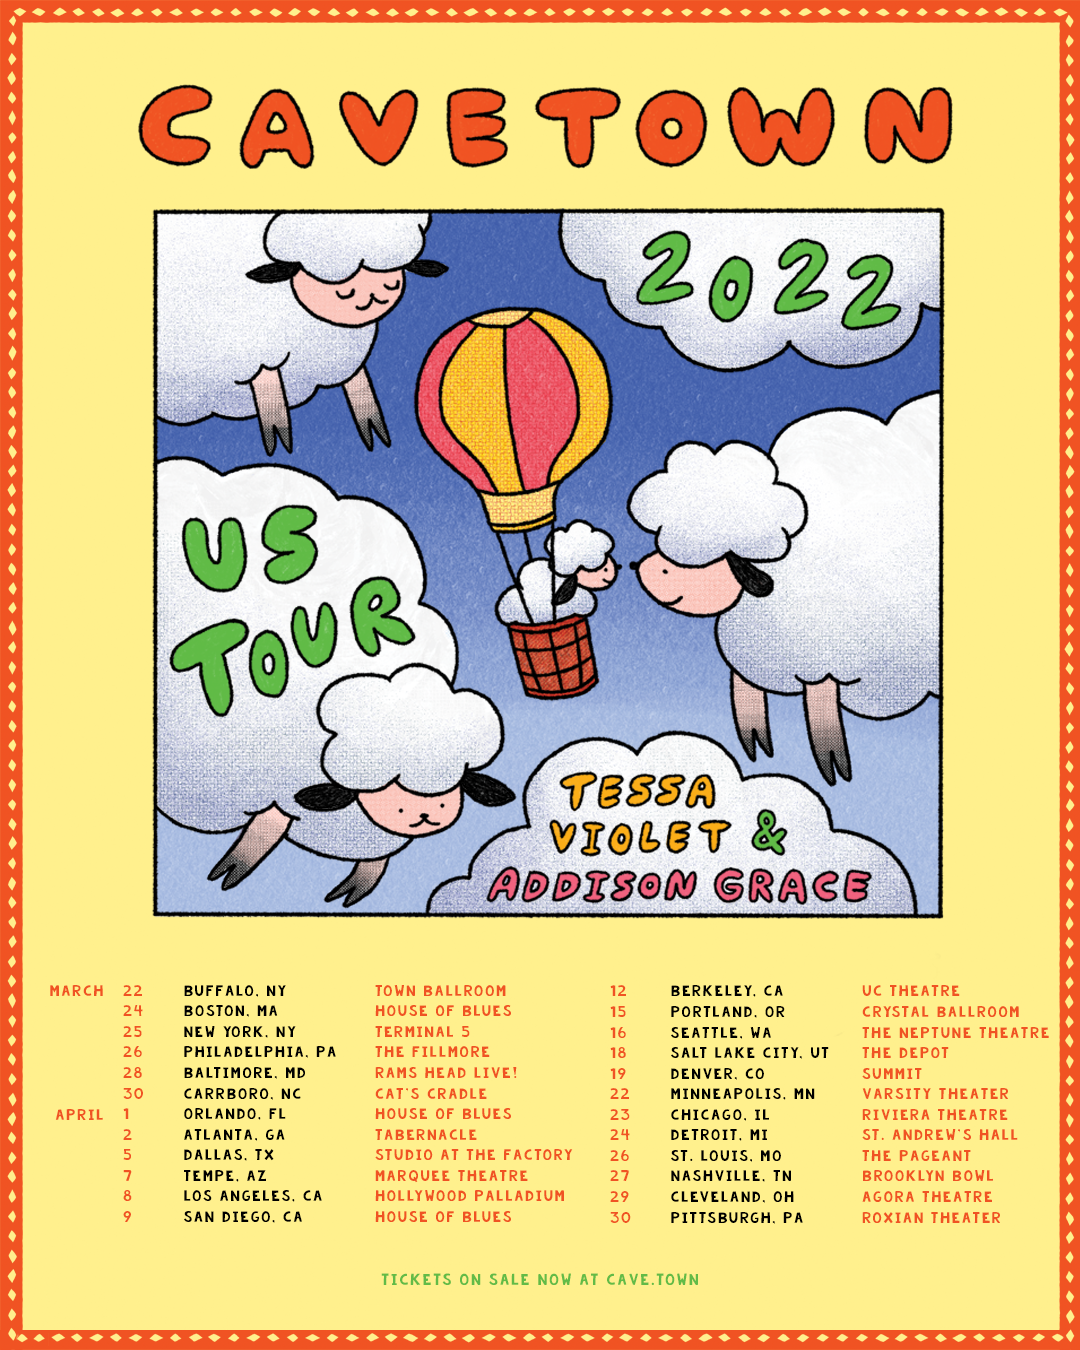 CAVETOWN ANNOUNCES 2022 U.S. HEADLINE TOUR FEATURING SUPPORT FROM TESSA